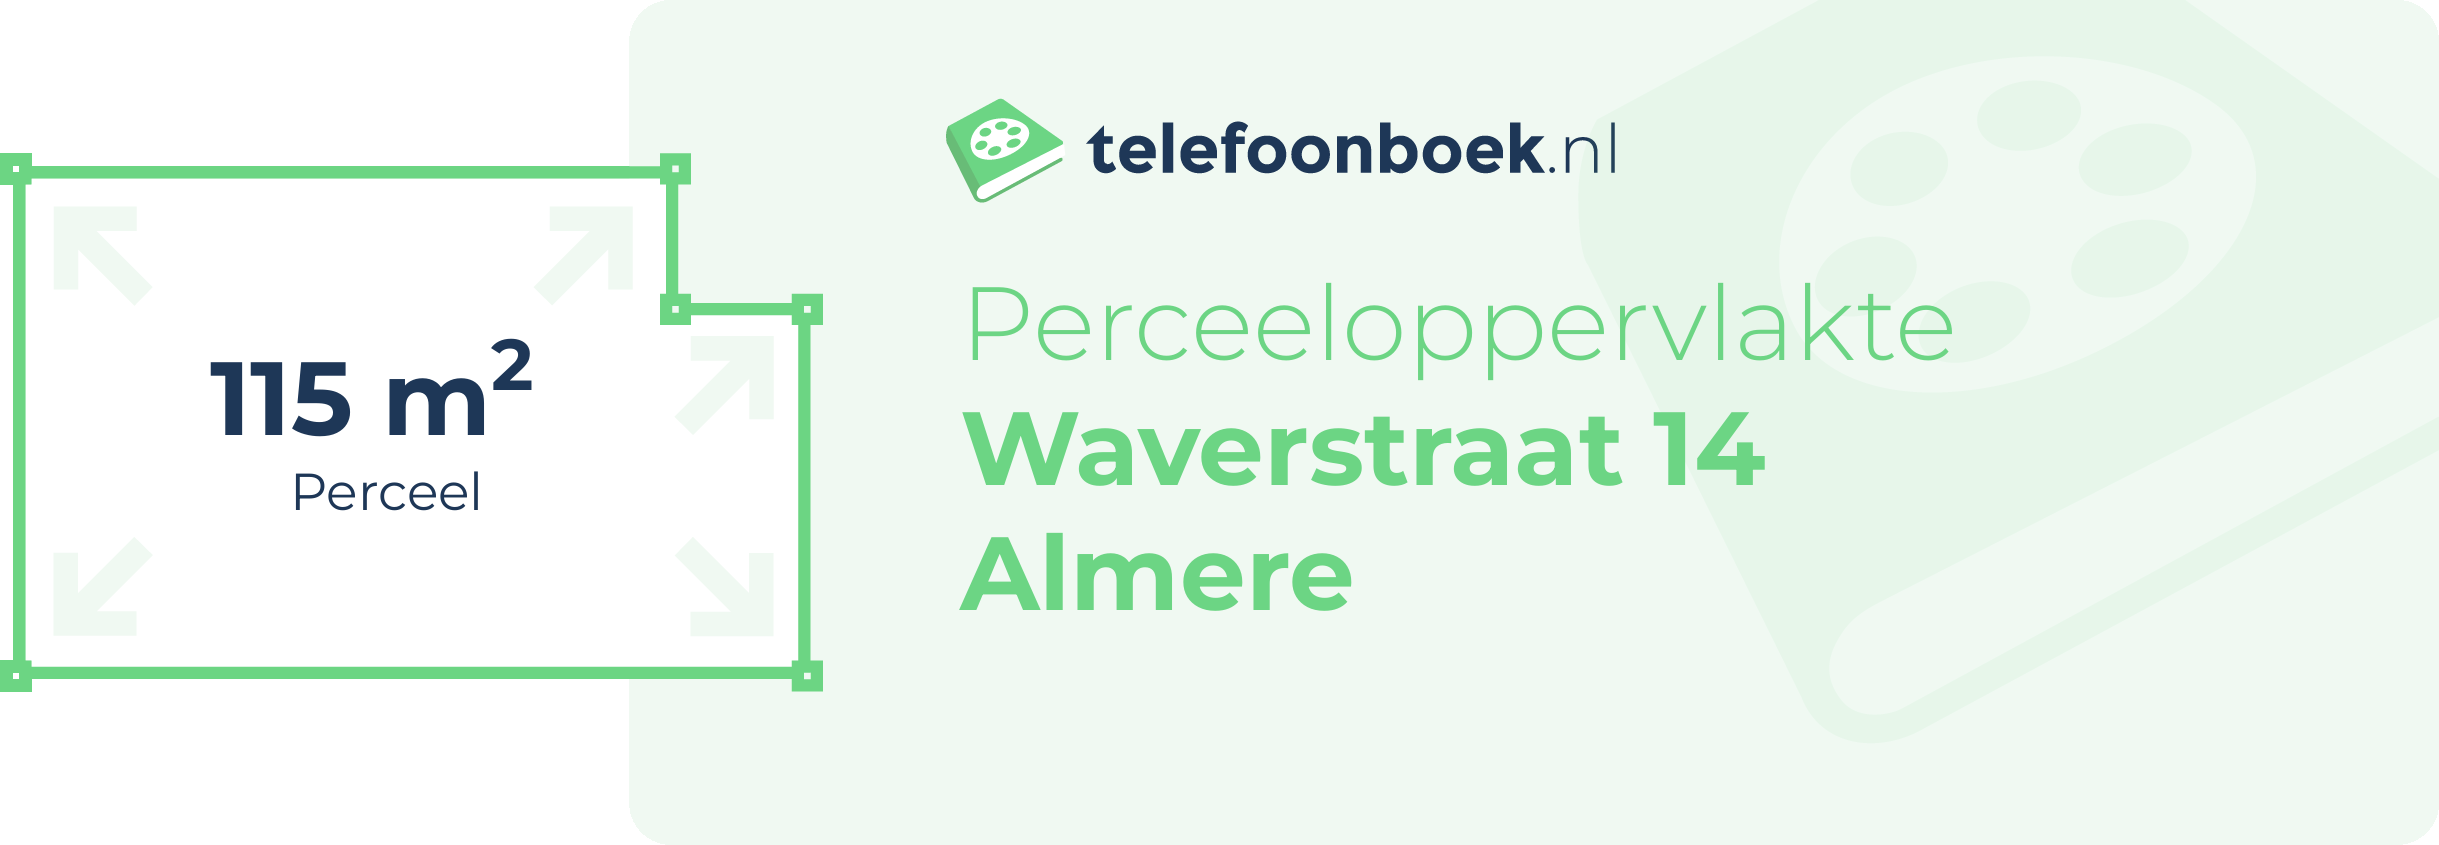 Perceeloppervlakte Waverstraat 14 Almere